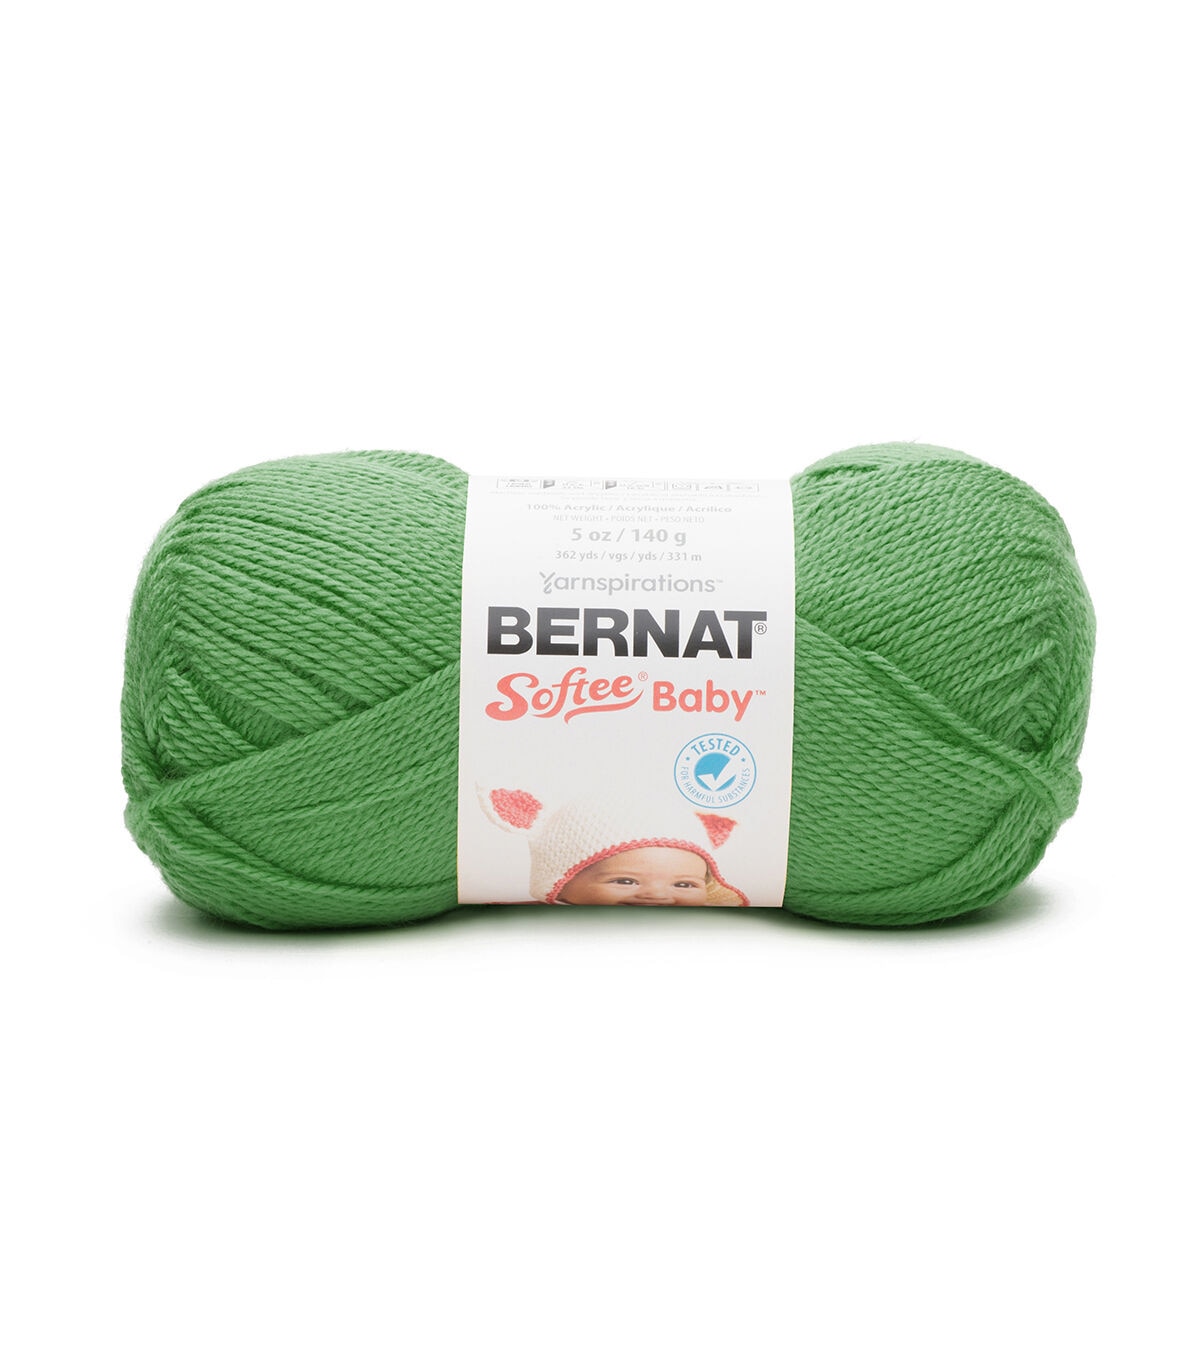 Bernat Softee Baby Yarn Clearance by Bernat